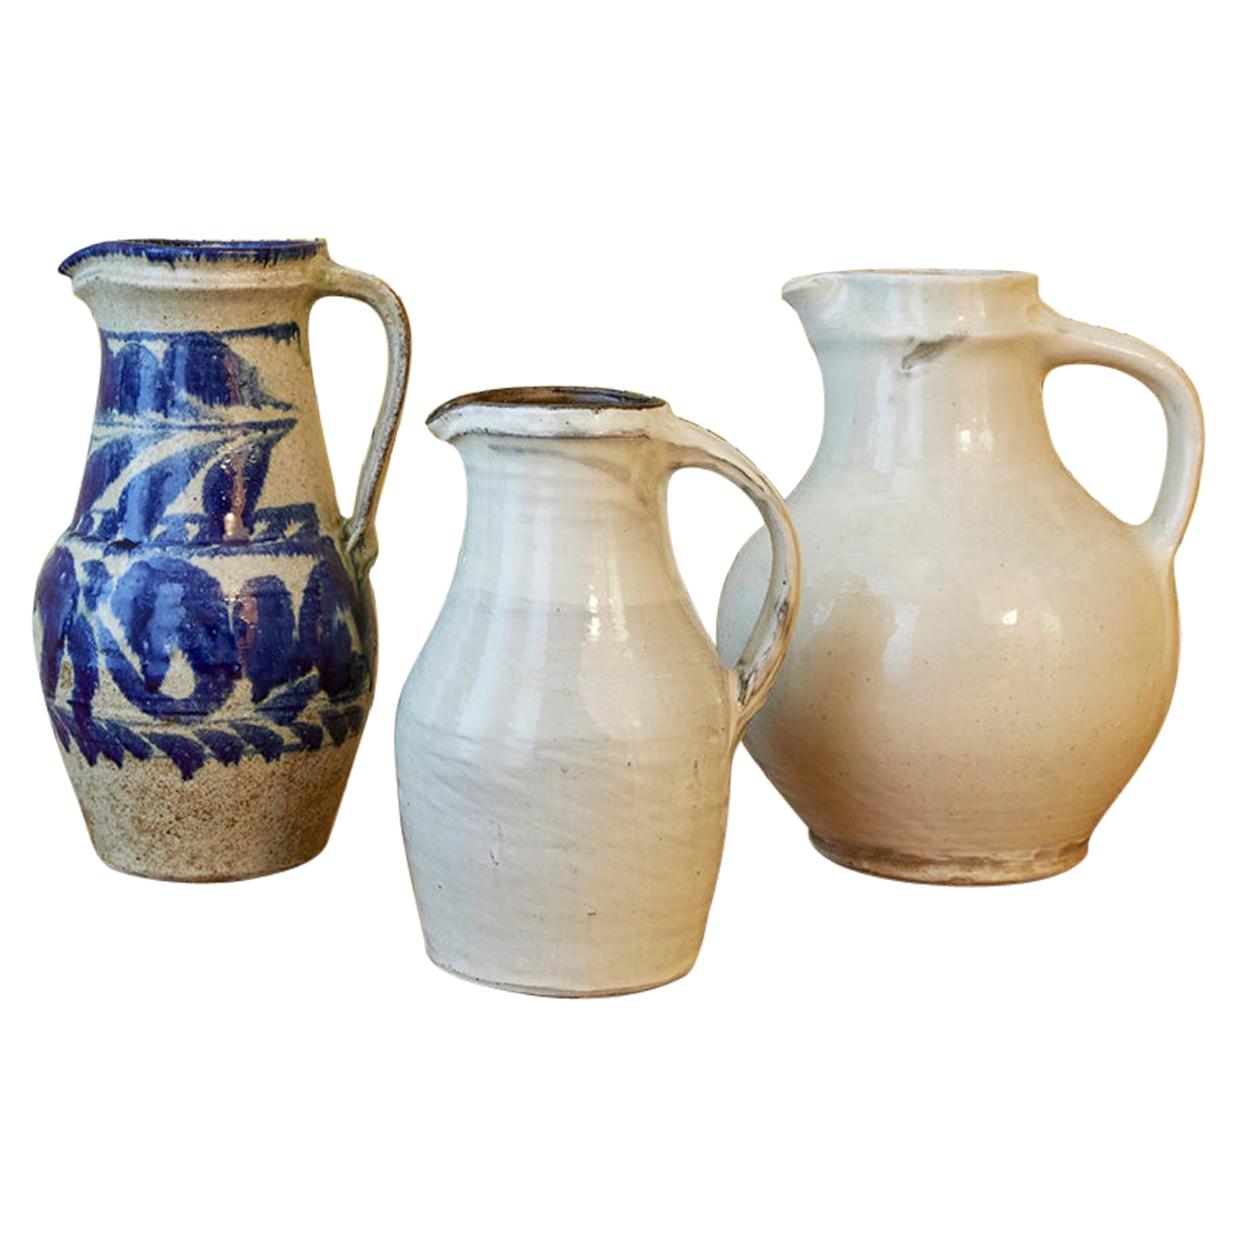 Vintage Japanese White Glazed Pitcher Made, Potters of The Onta Pottery Village